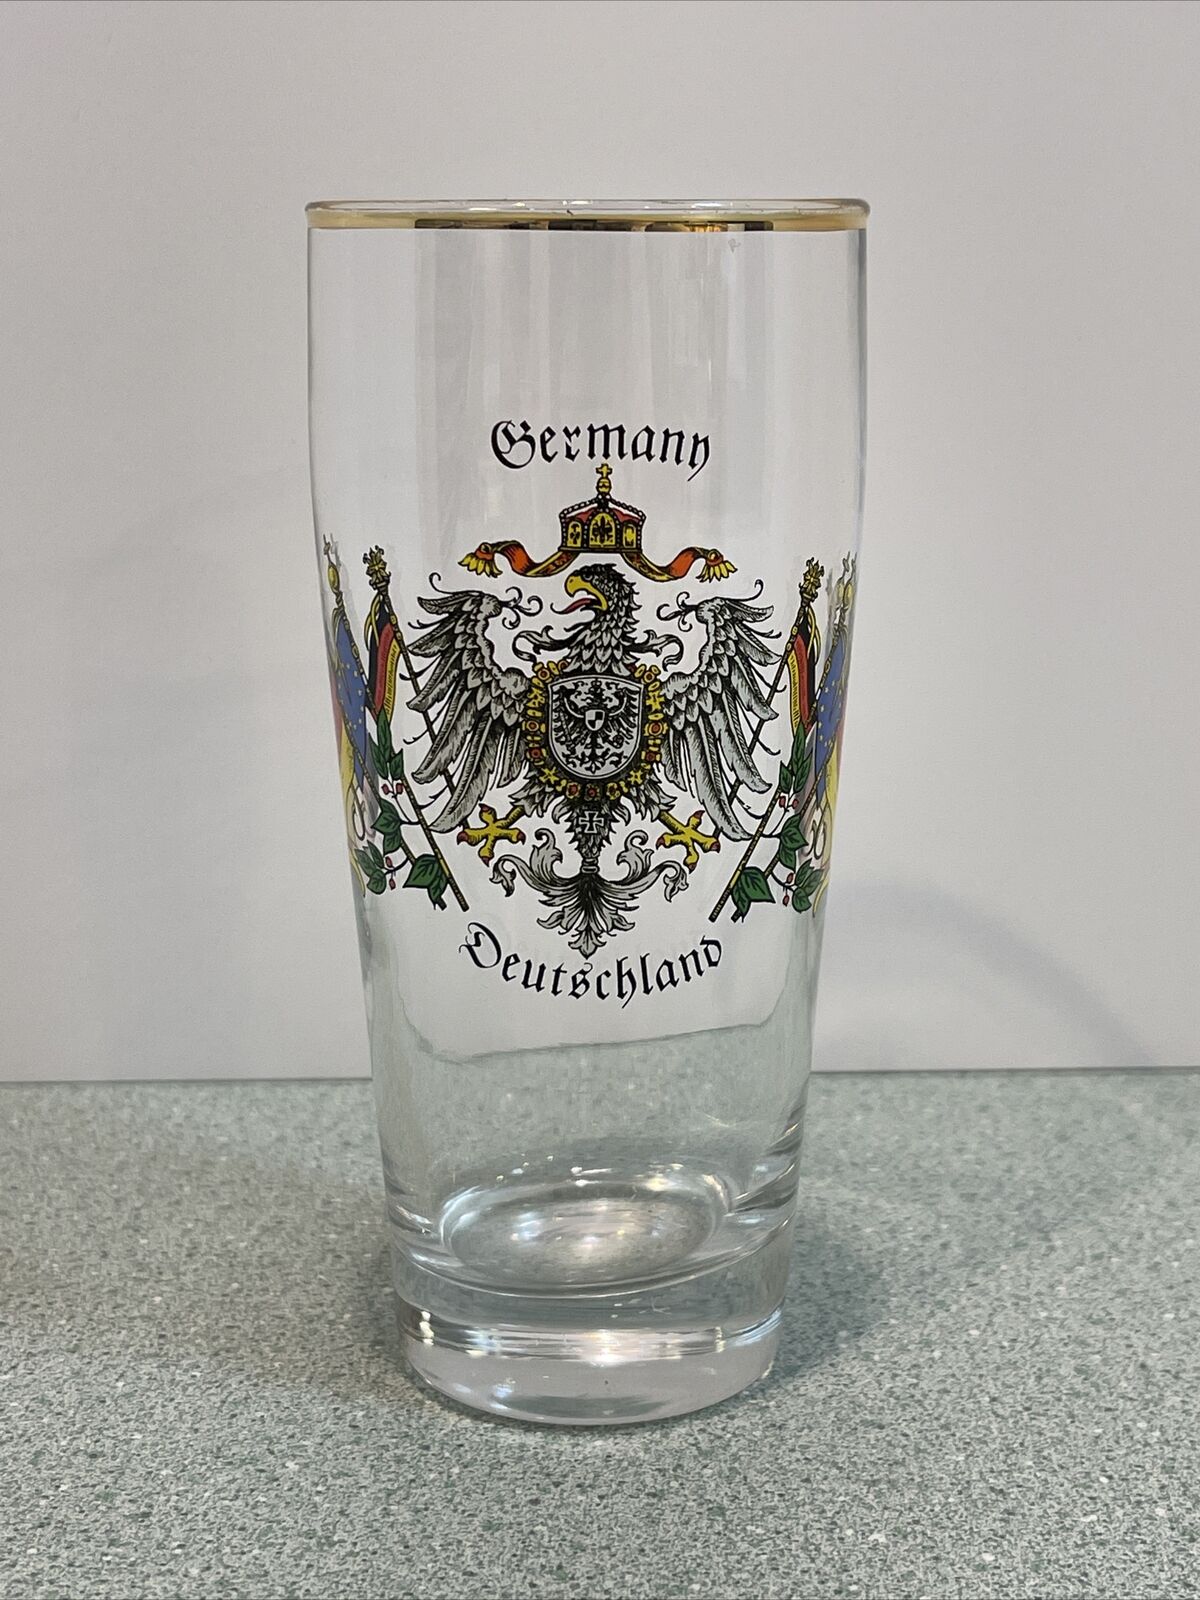 Germany Deutschland Beer Glass 0.2l RKL